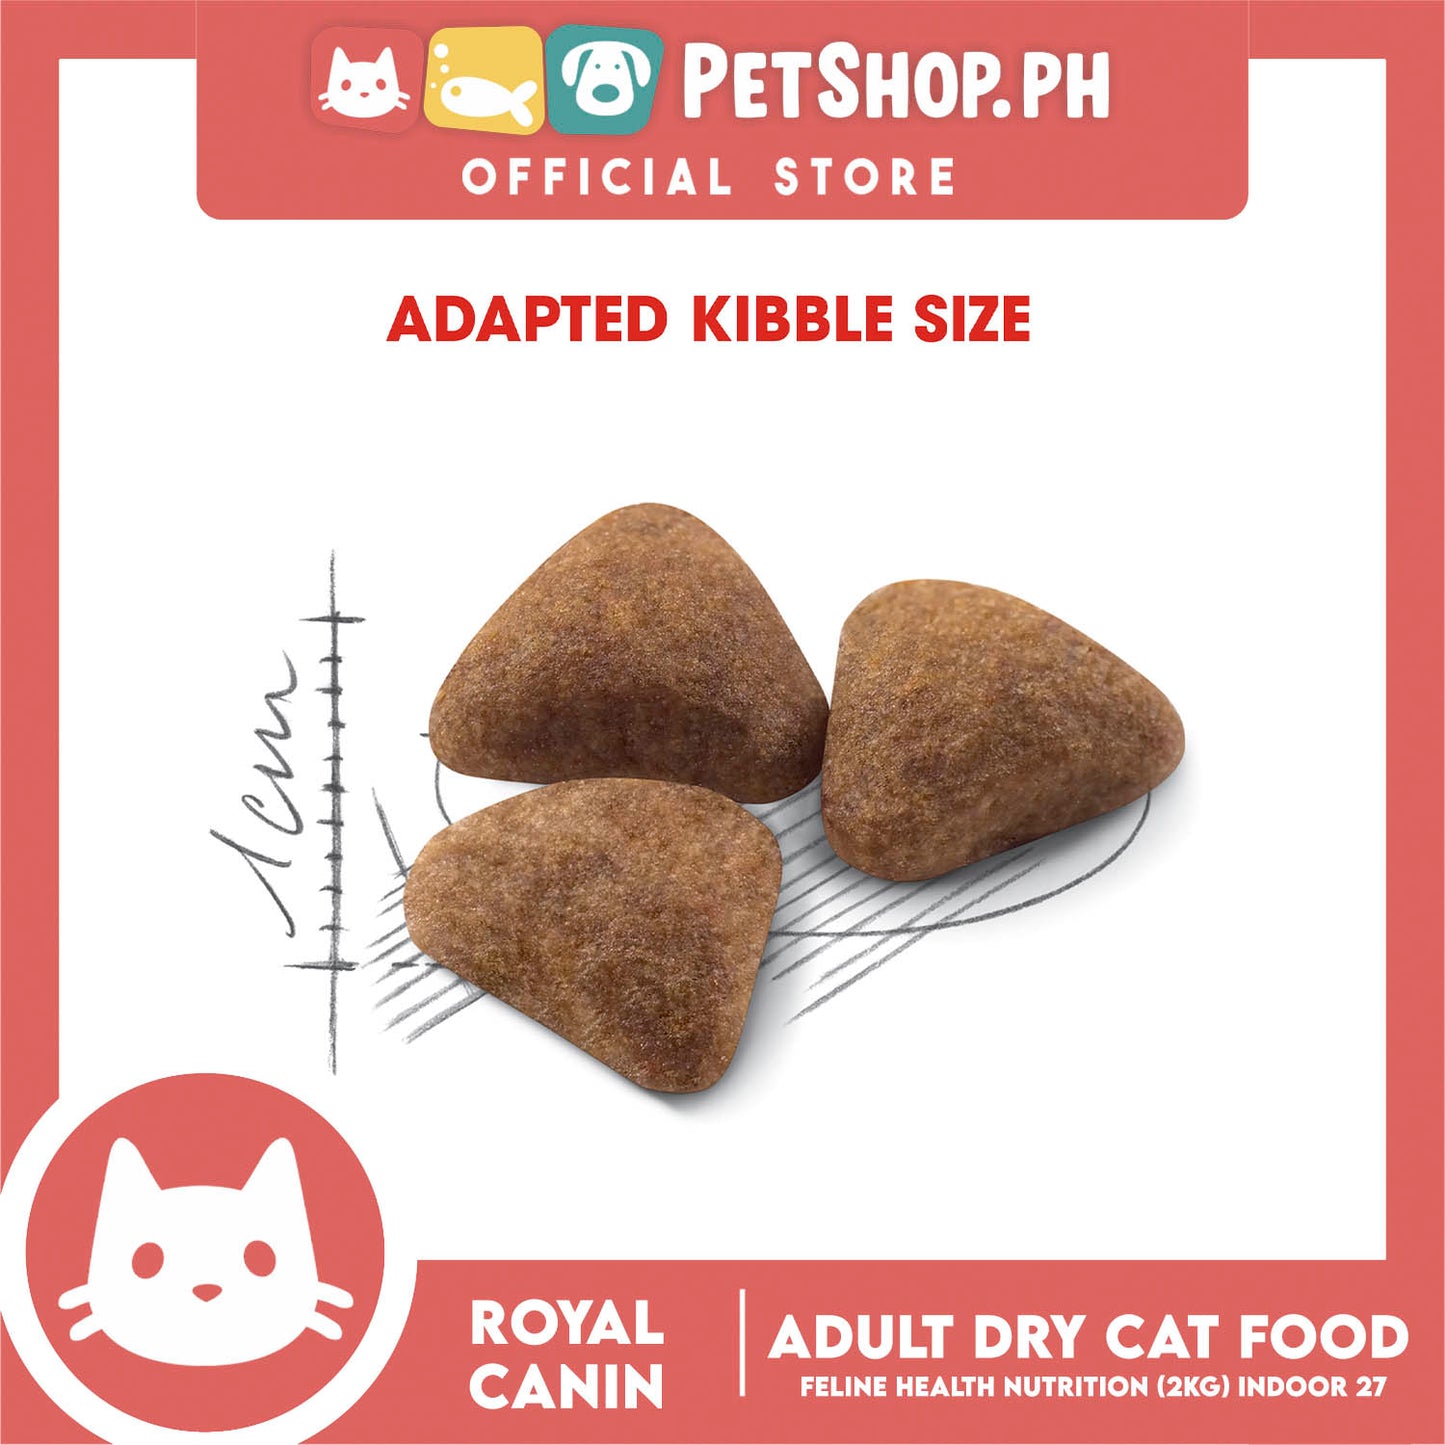 Royal Canin Indoor 27 (2kg) Adult Dry Cat Food - Feline Health Nutrition